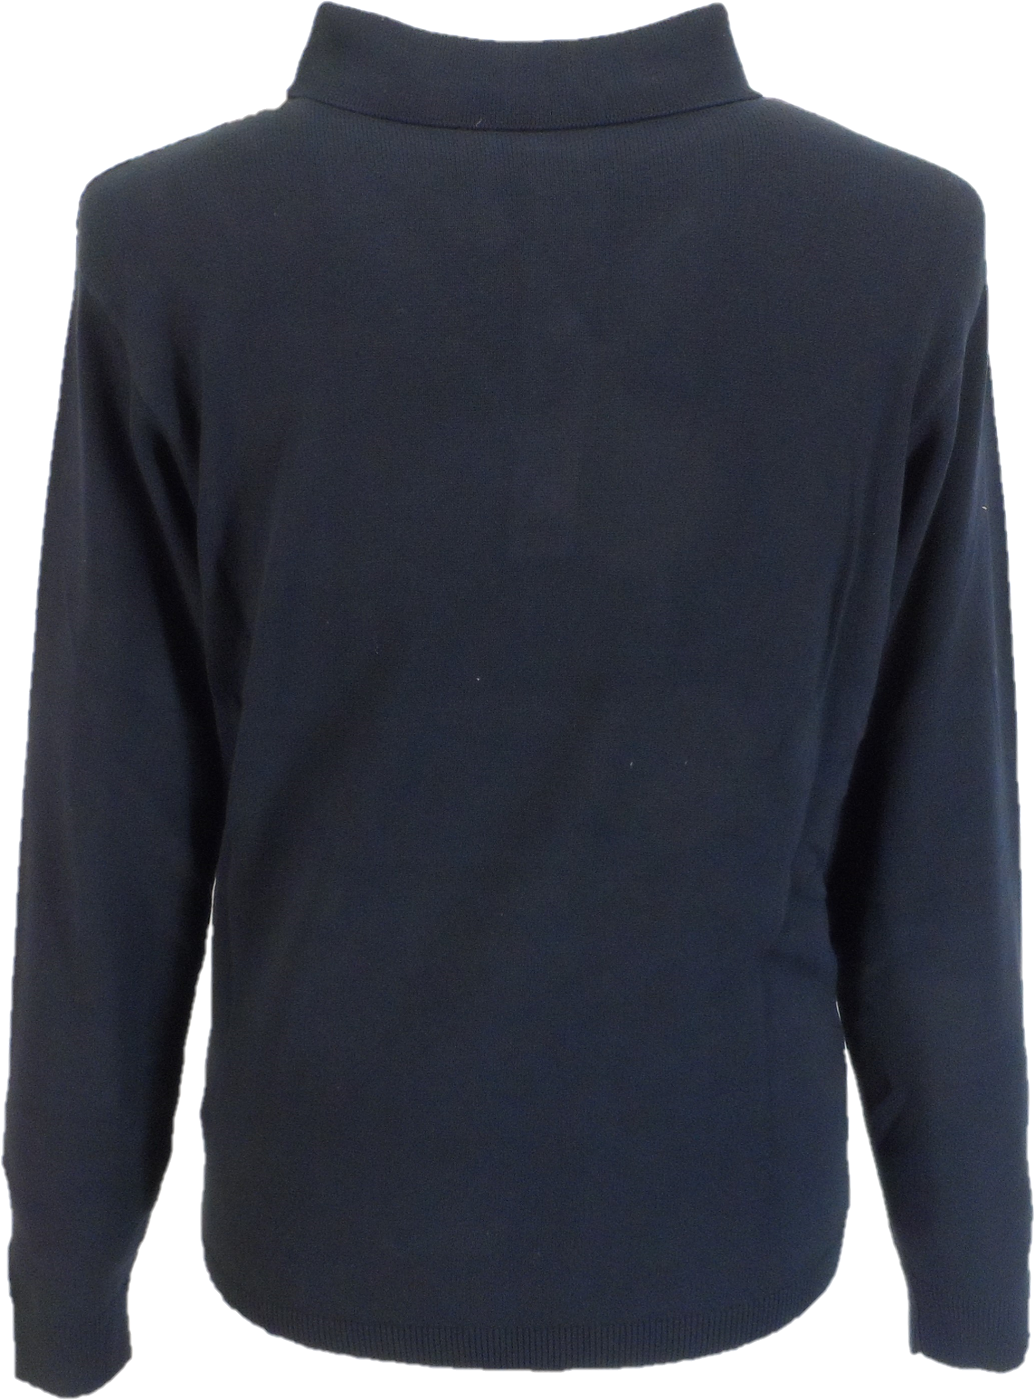 Gabicci Vintage polo tricoté à rayures multiples bleu marine serle